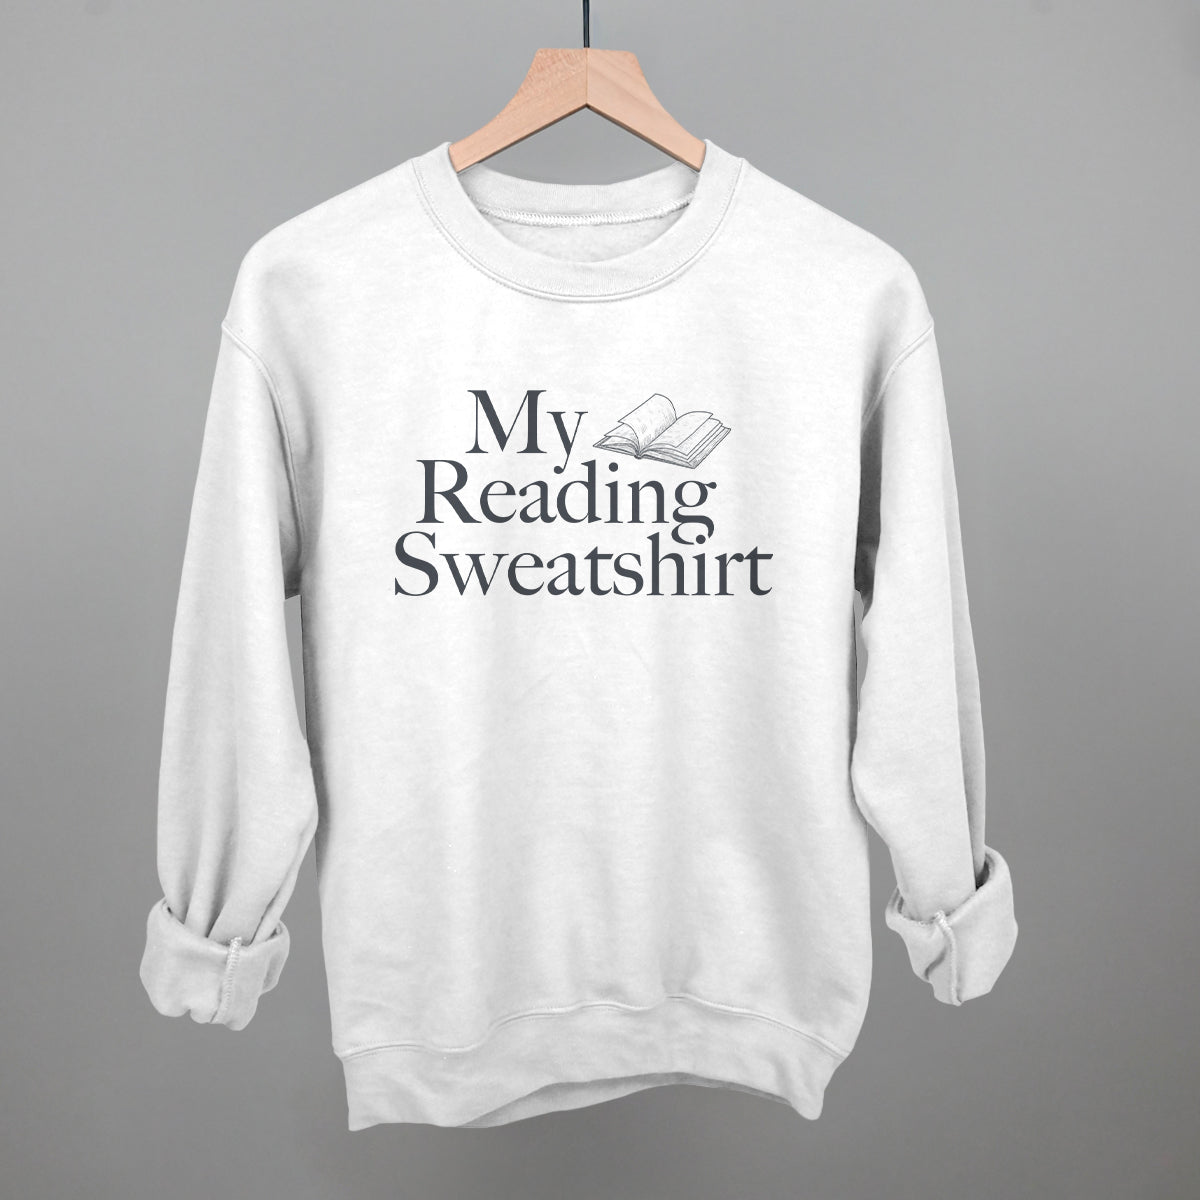 My Reading Sweatshirt